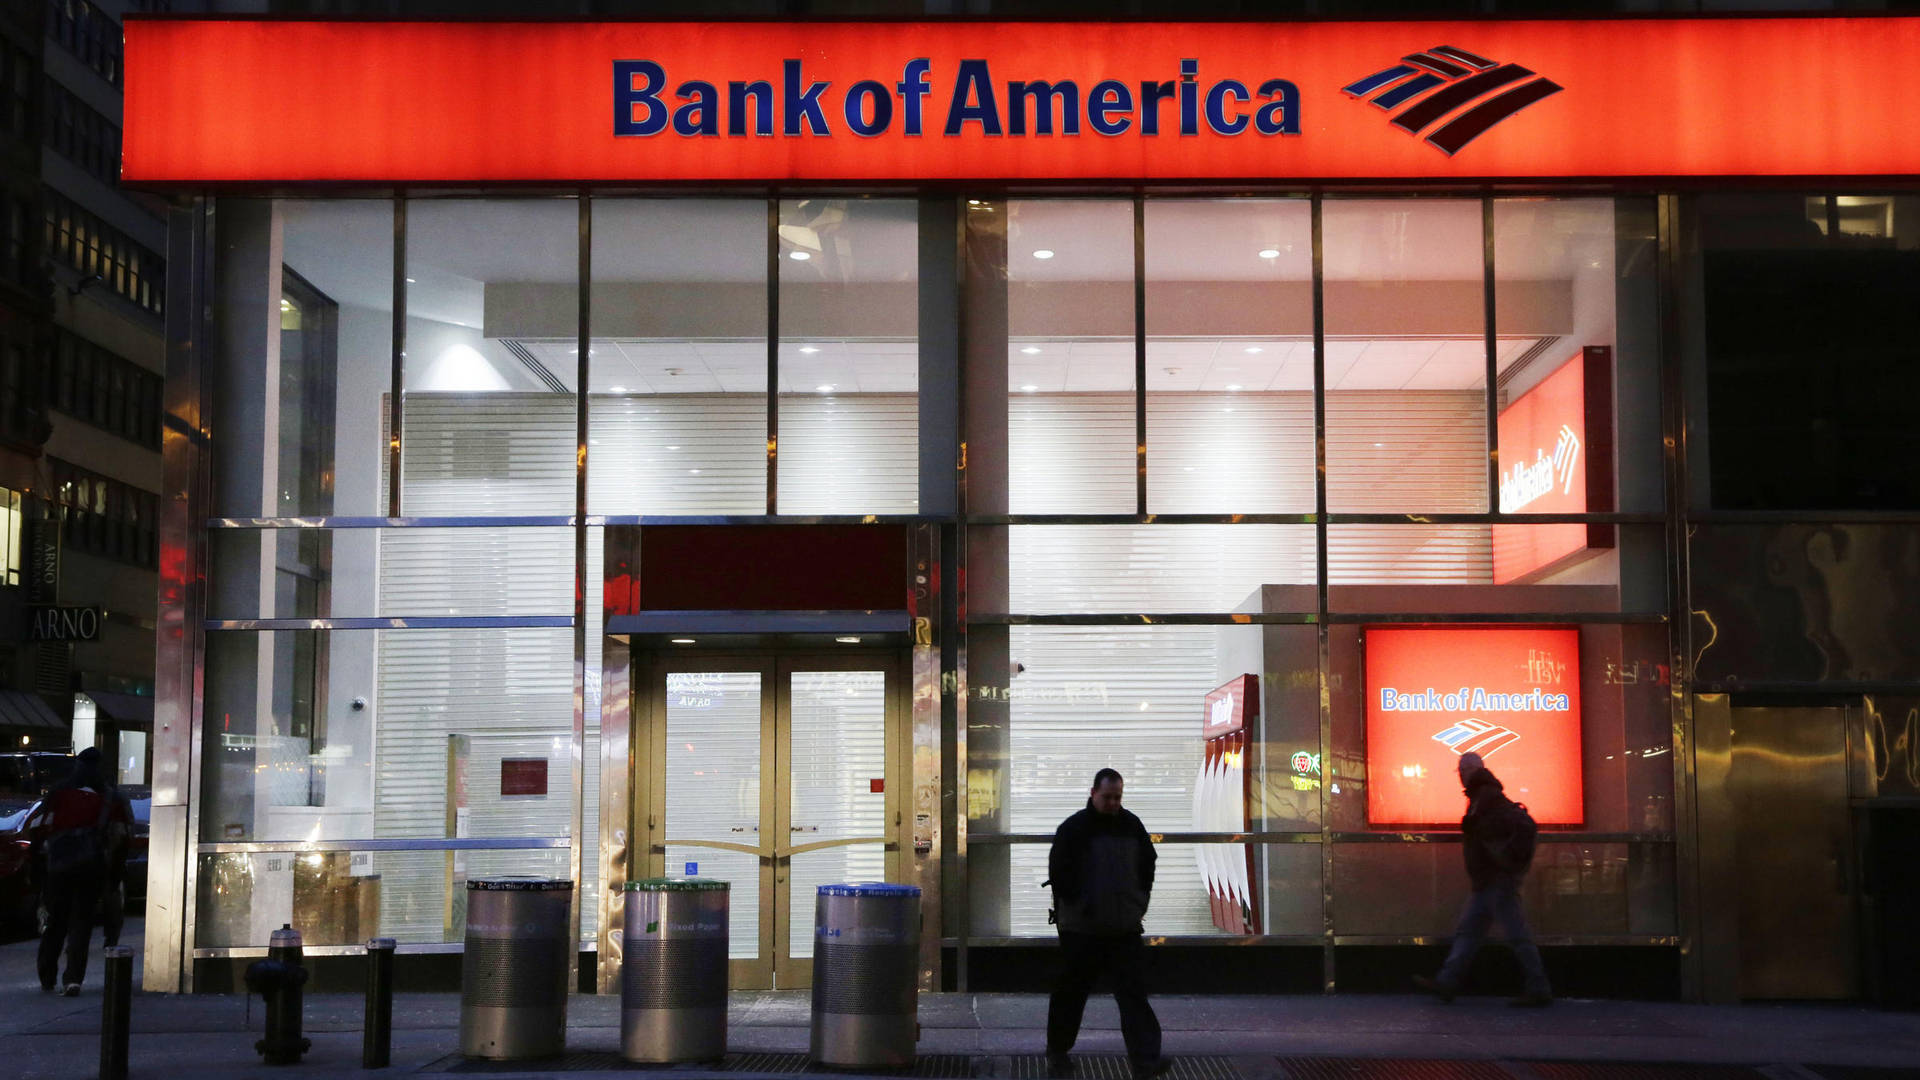 Bank Of America Facade At Night Wallpaper